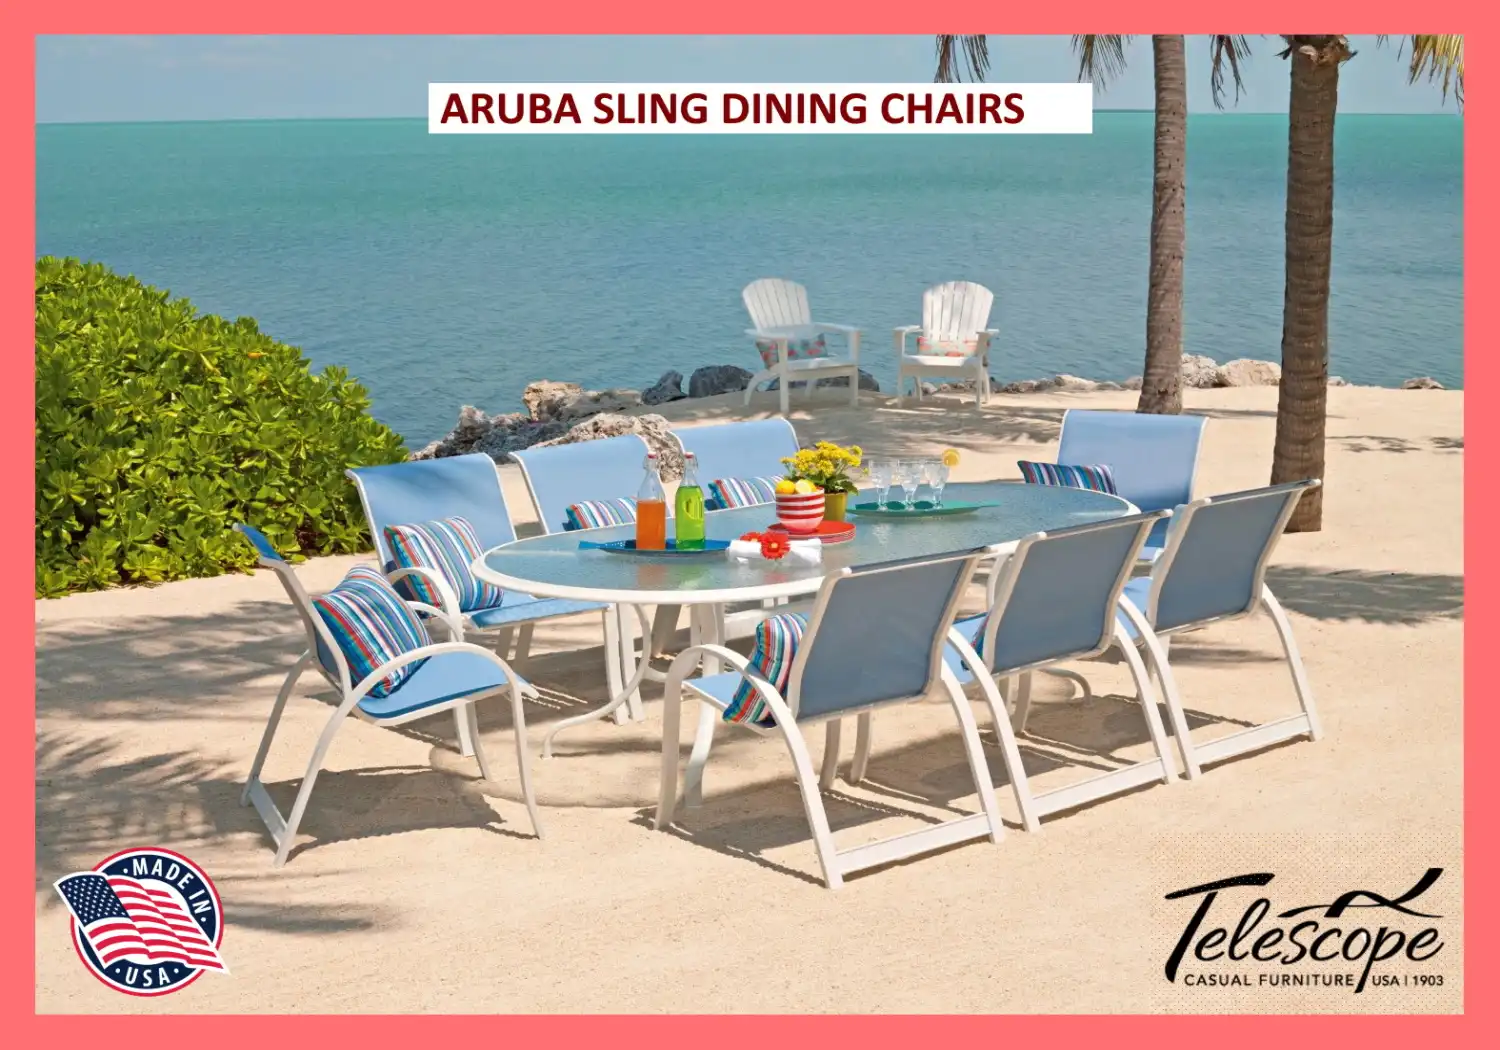 ARUBA SLING DINING CHAIRS